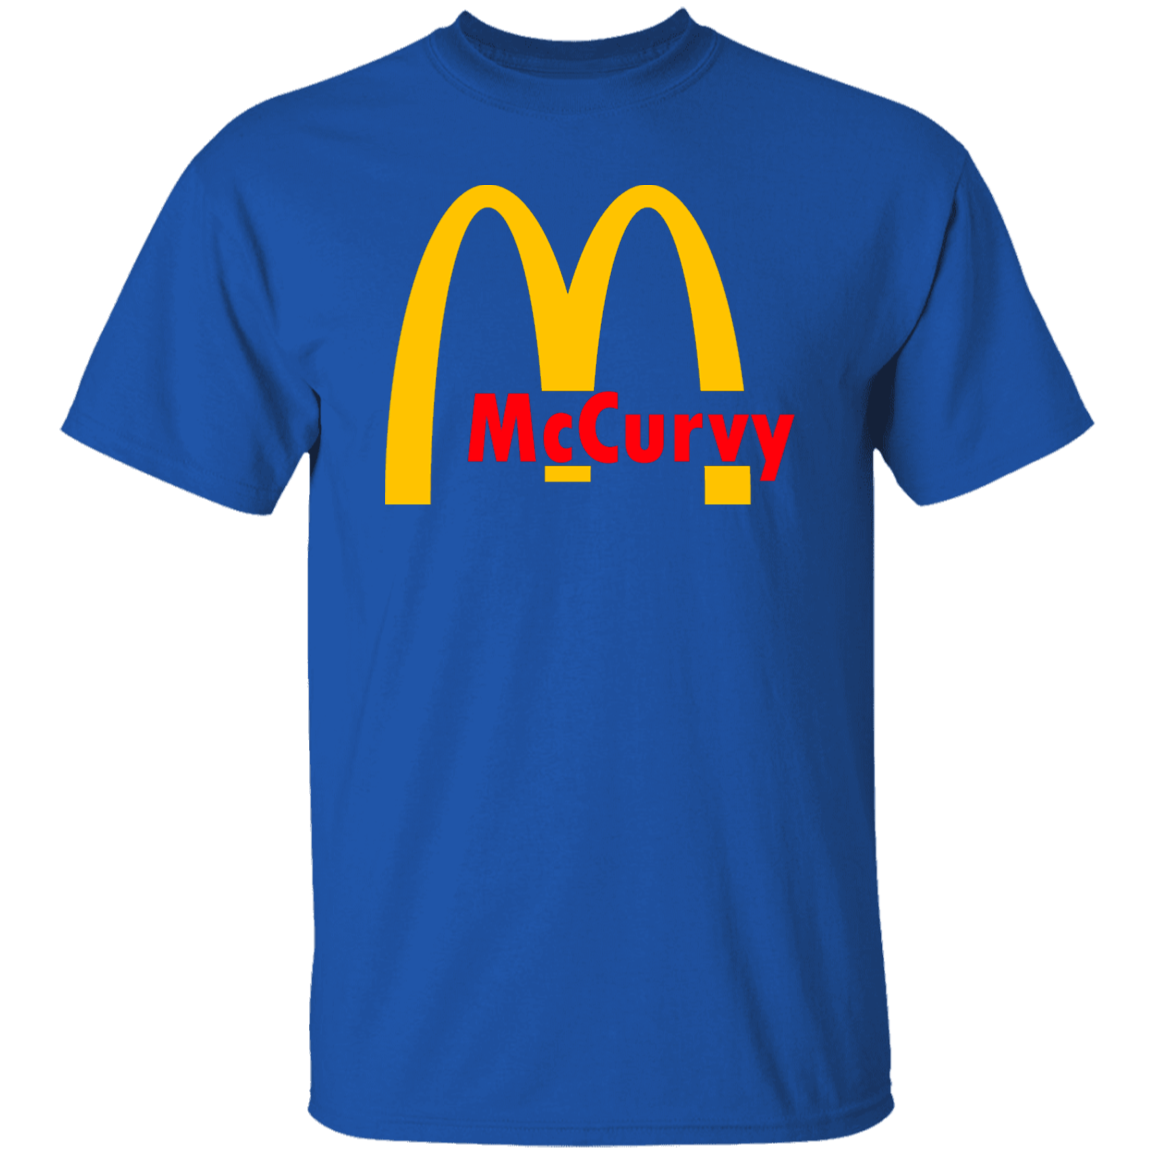 McCurvy -  T-Shirt